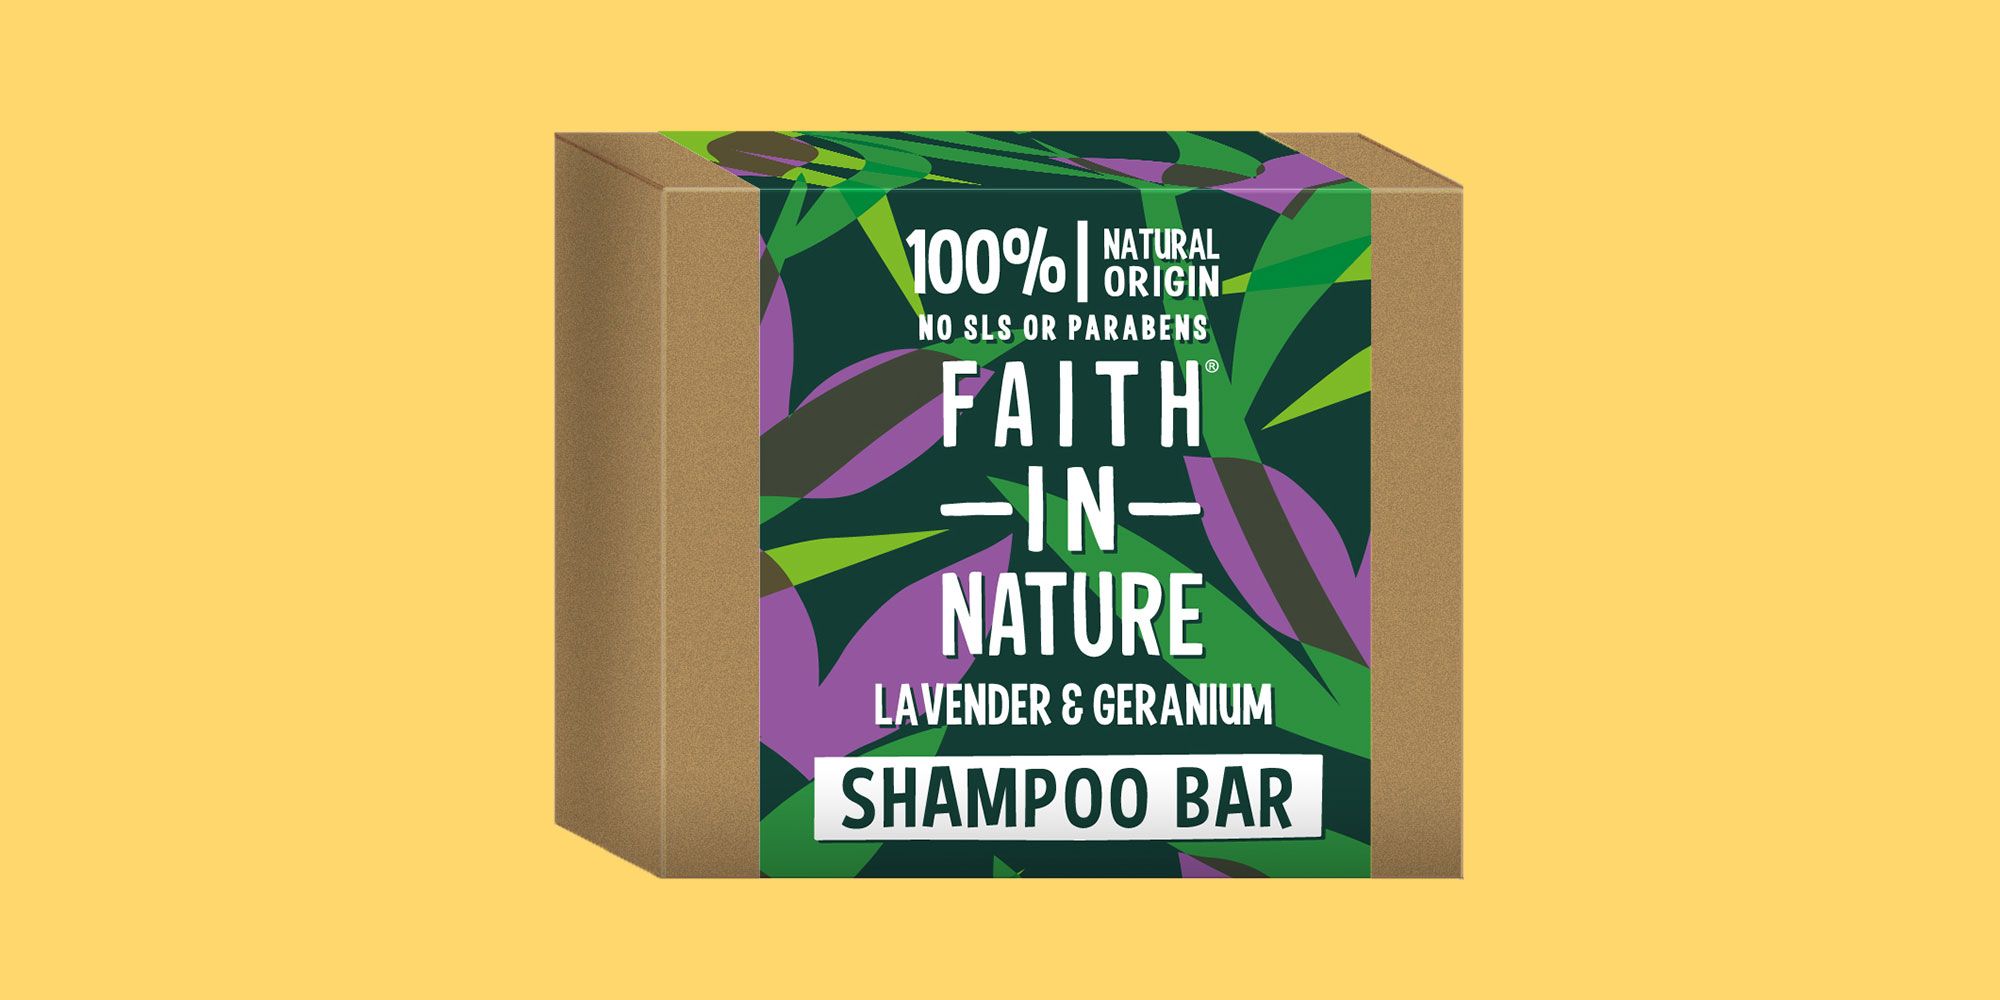 Faith in Nature Lavender & Geranium Shampoo review